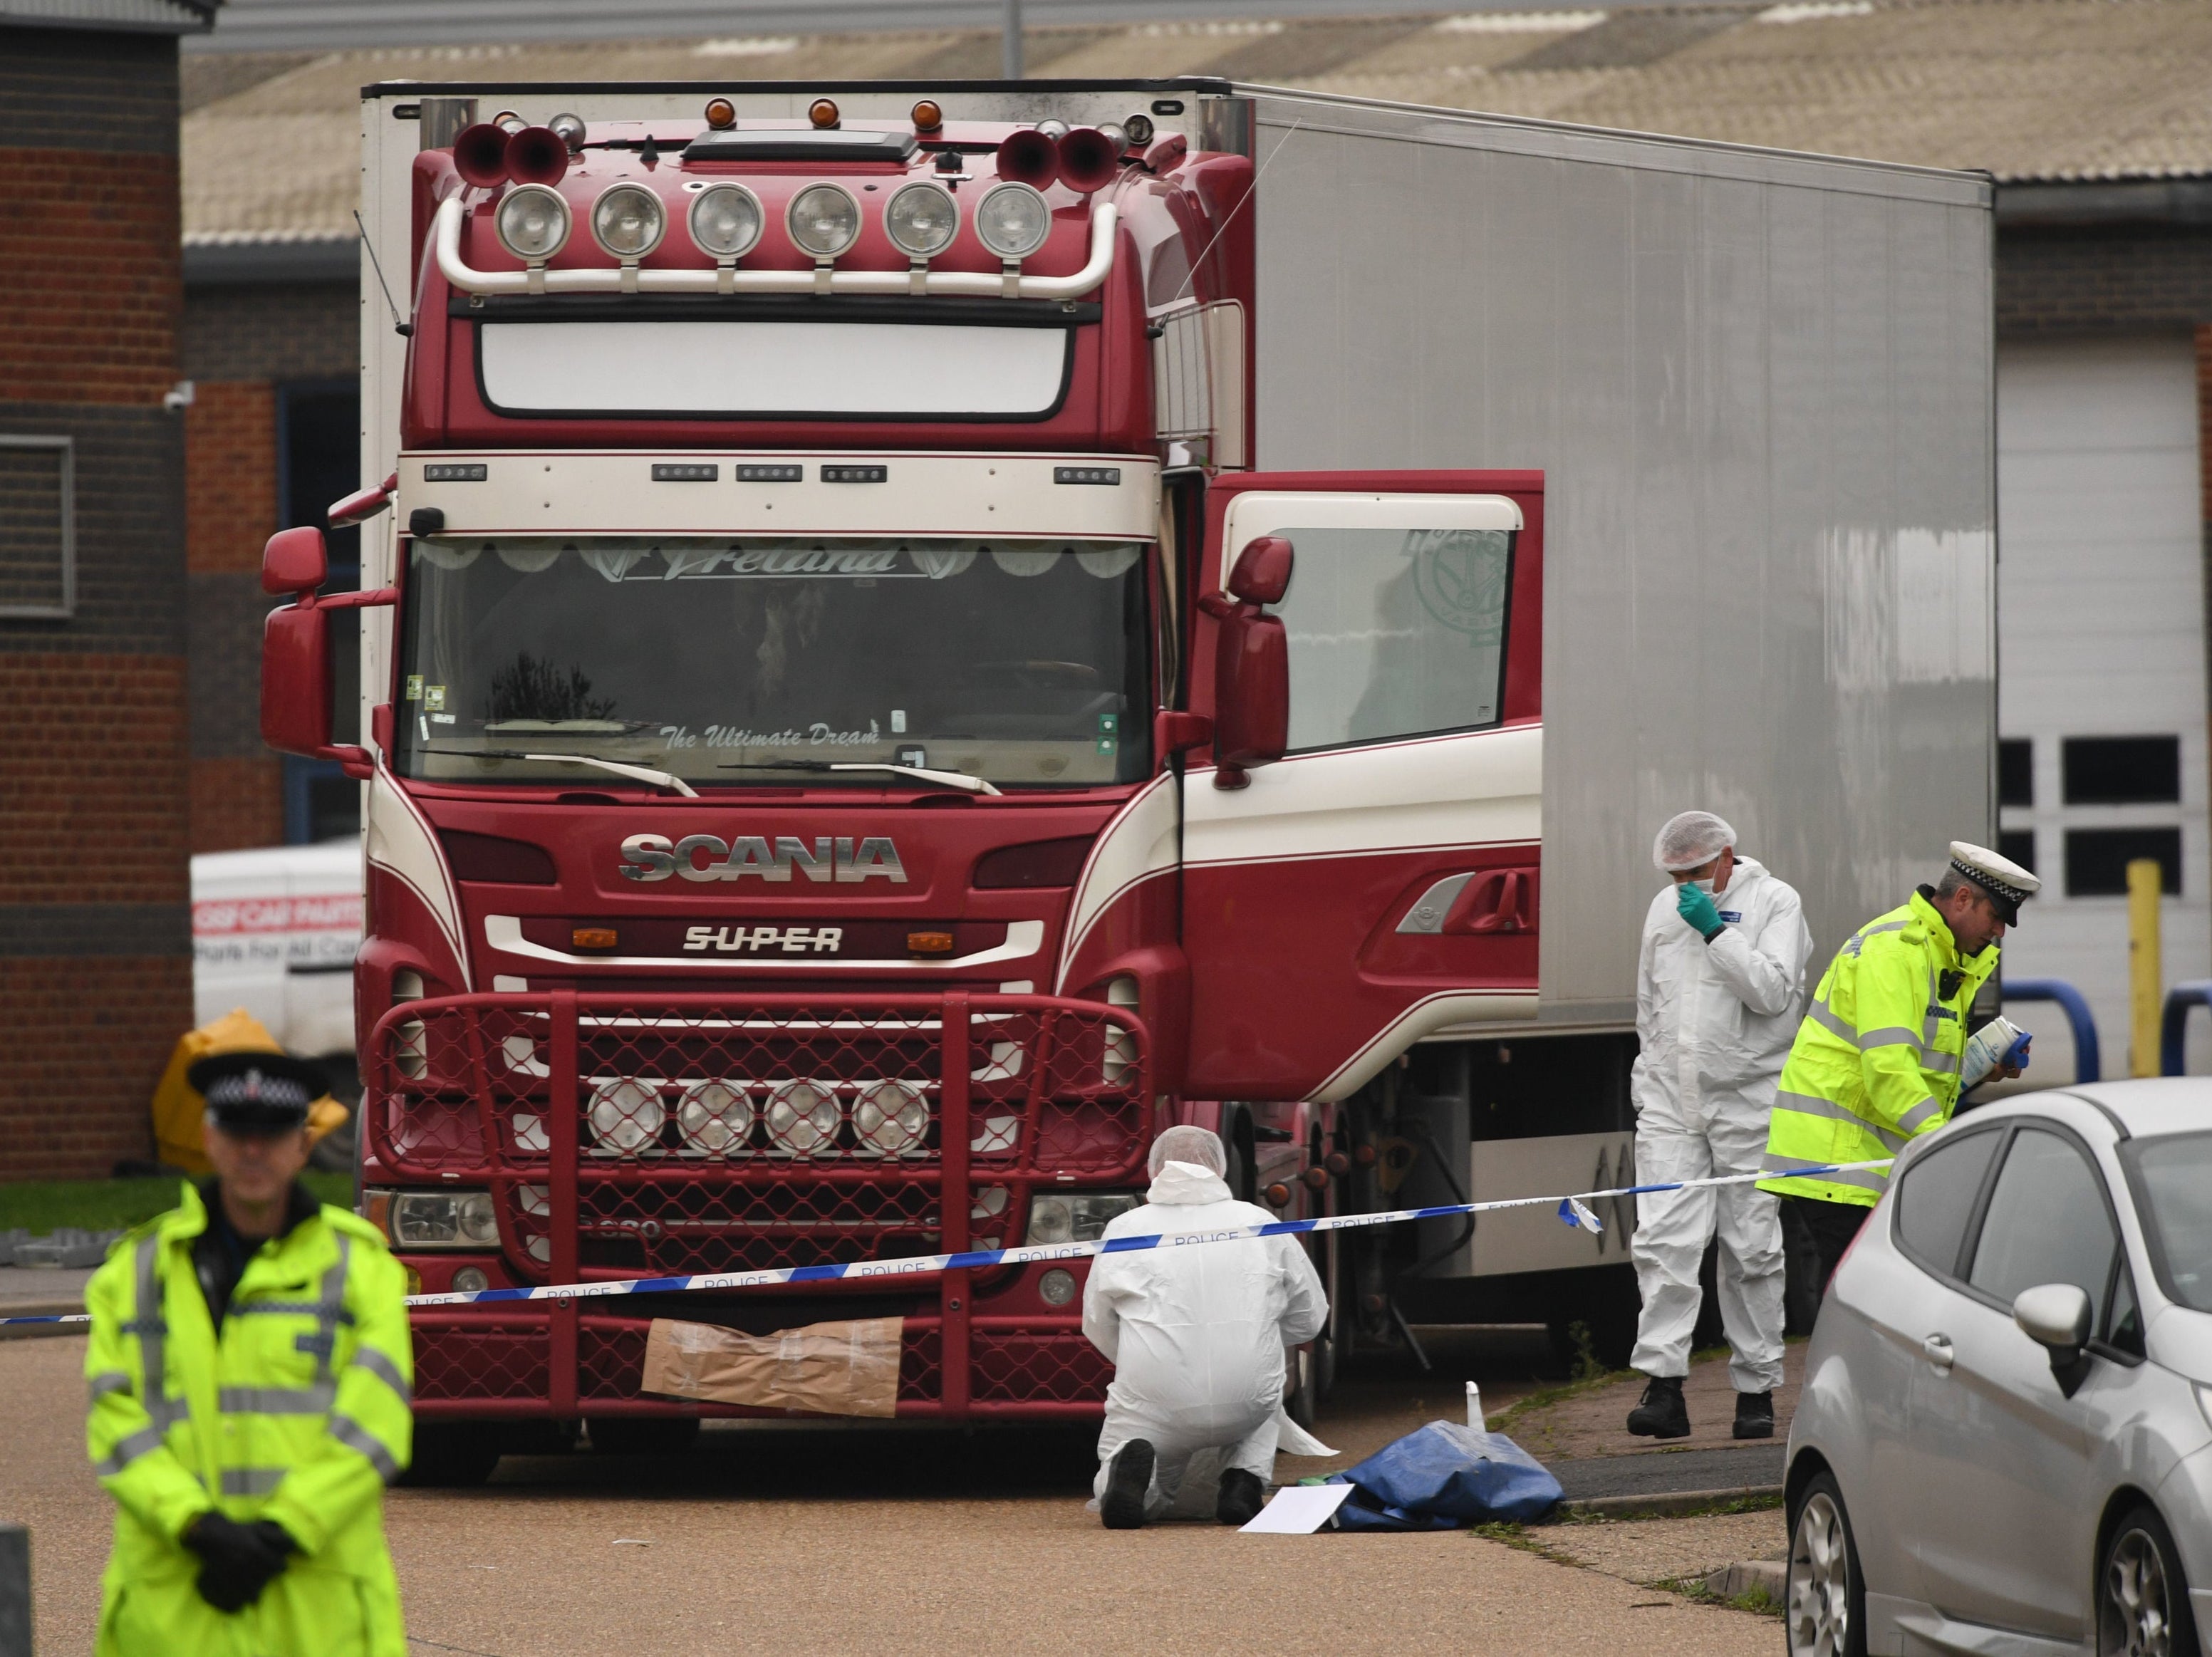 Thirty-nine Vietnamese people were found dead in a lorry in Grays, Essex, last year